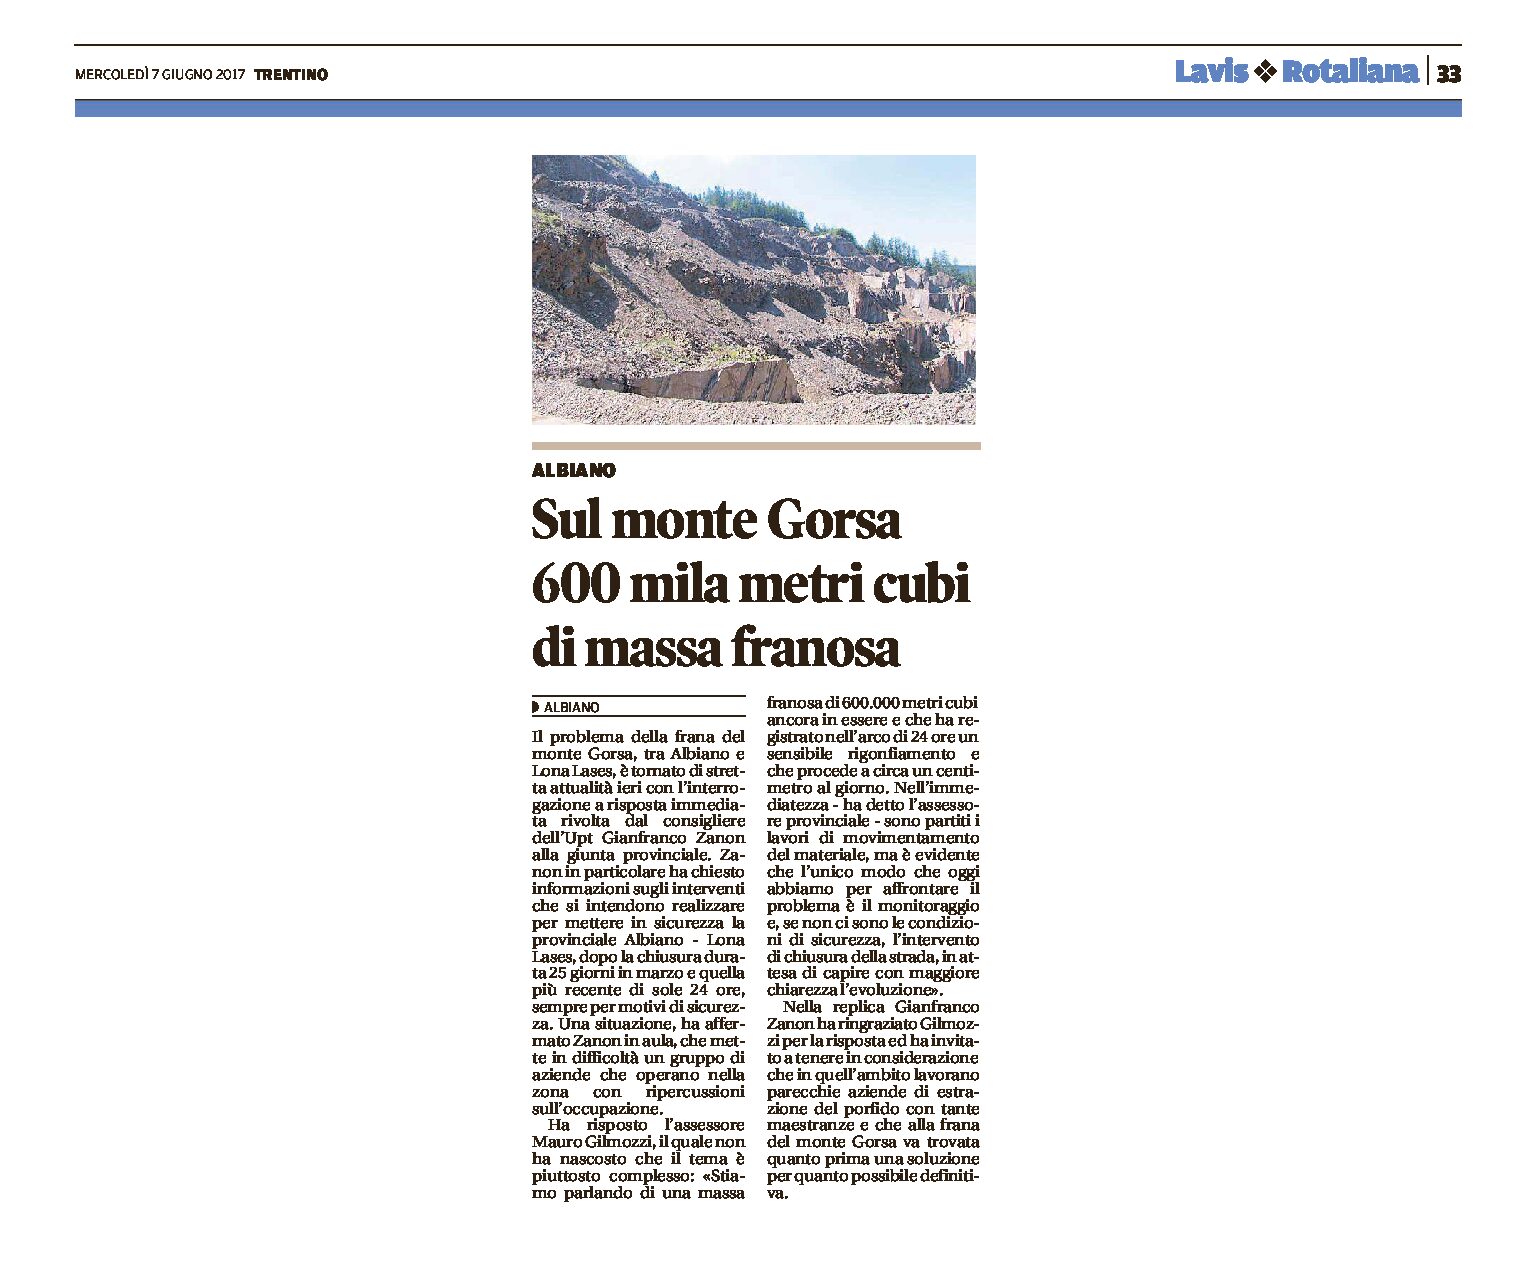 Monte Gorsa: 600 mila metri cubi di massa franosa